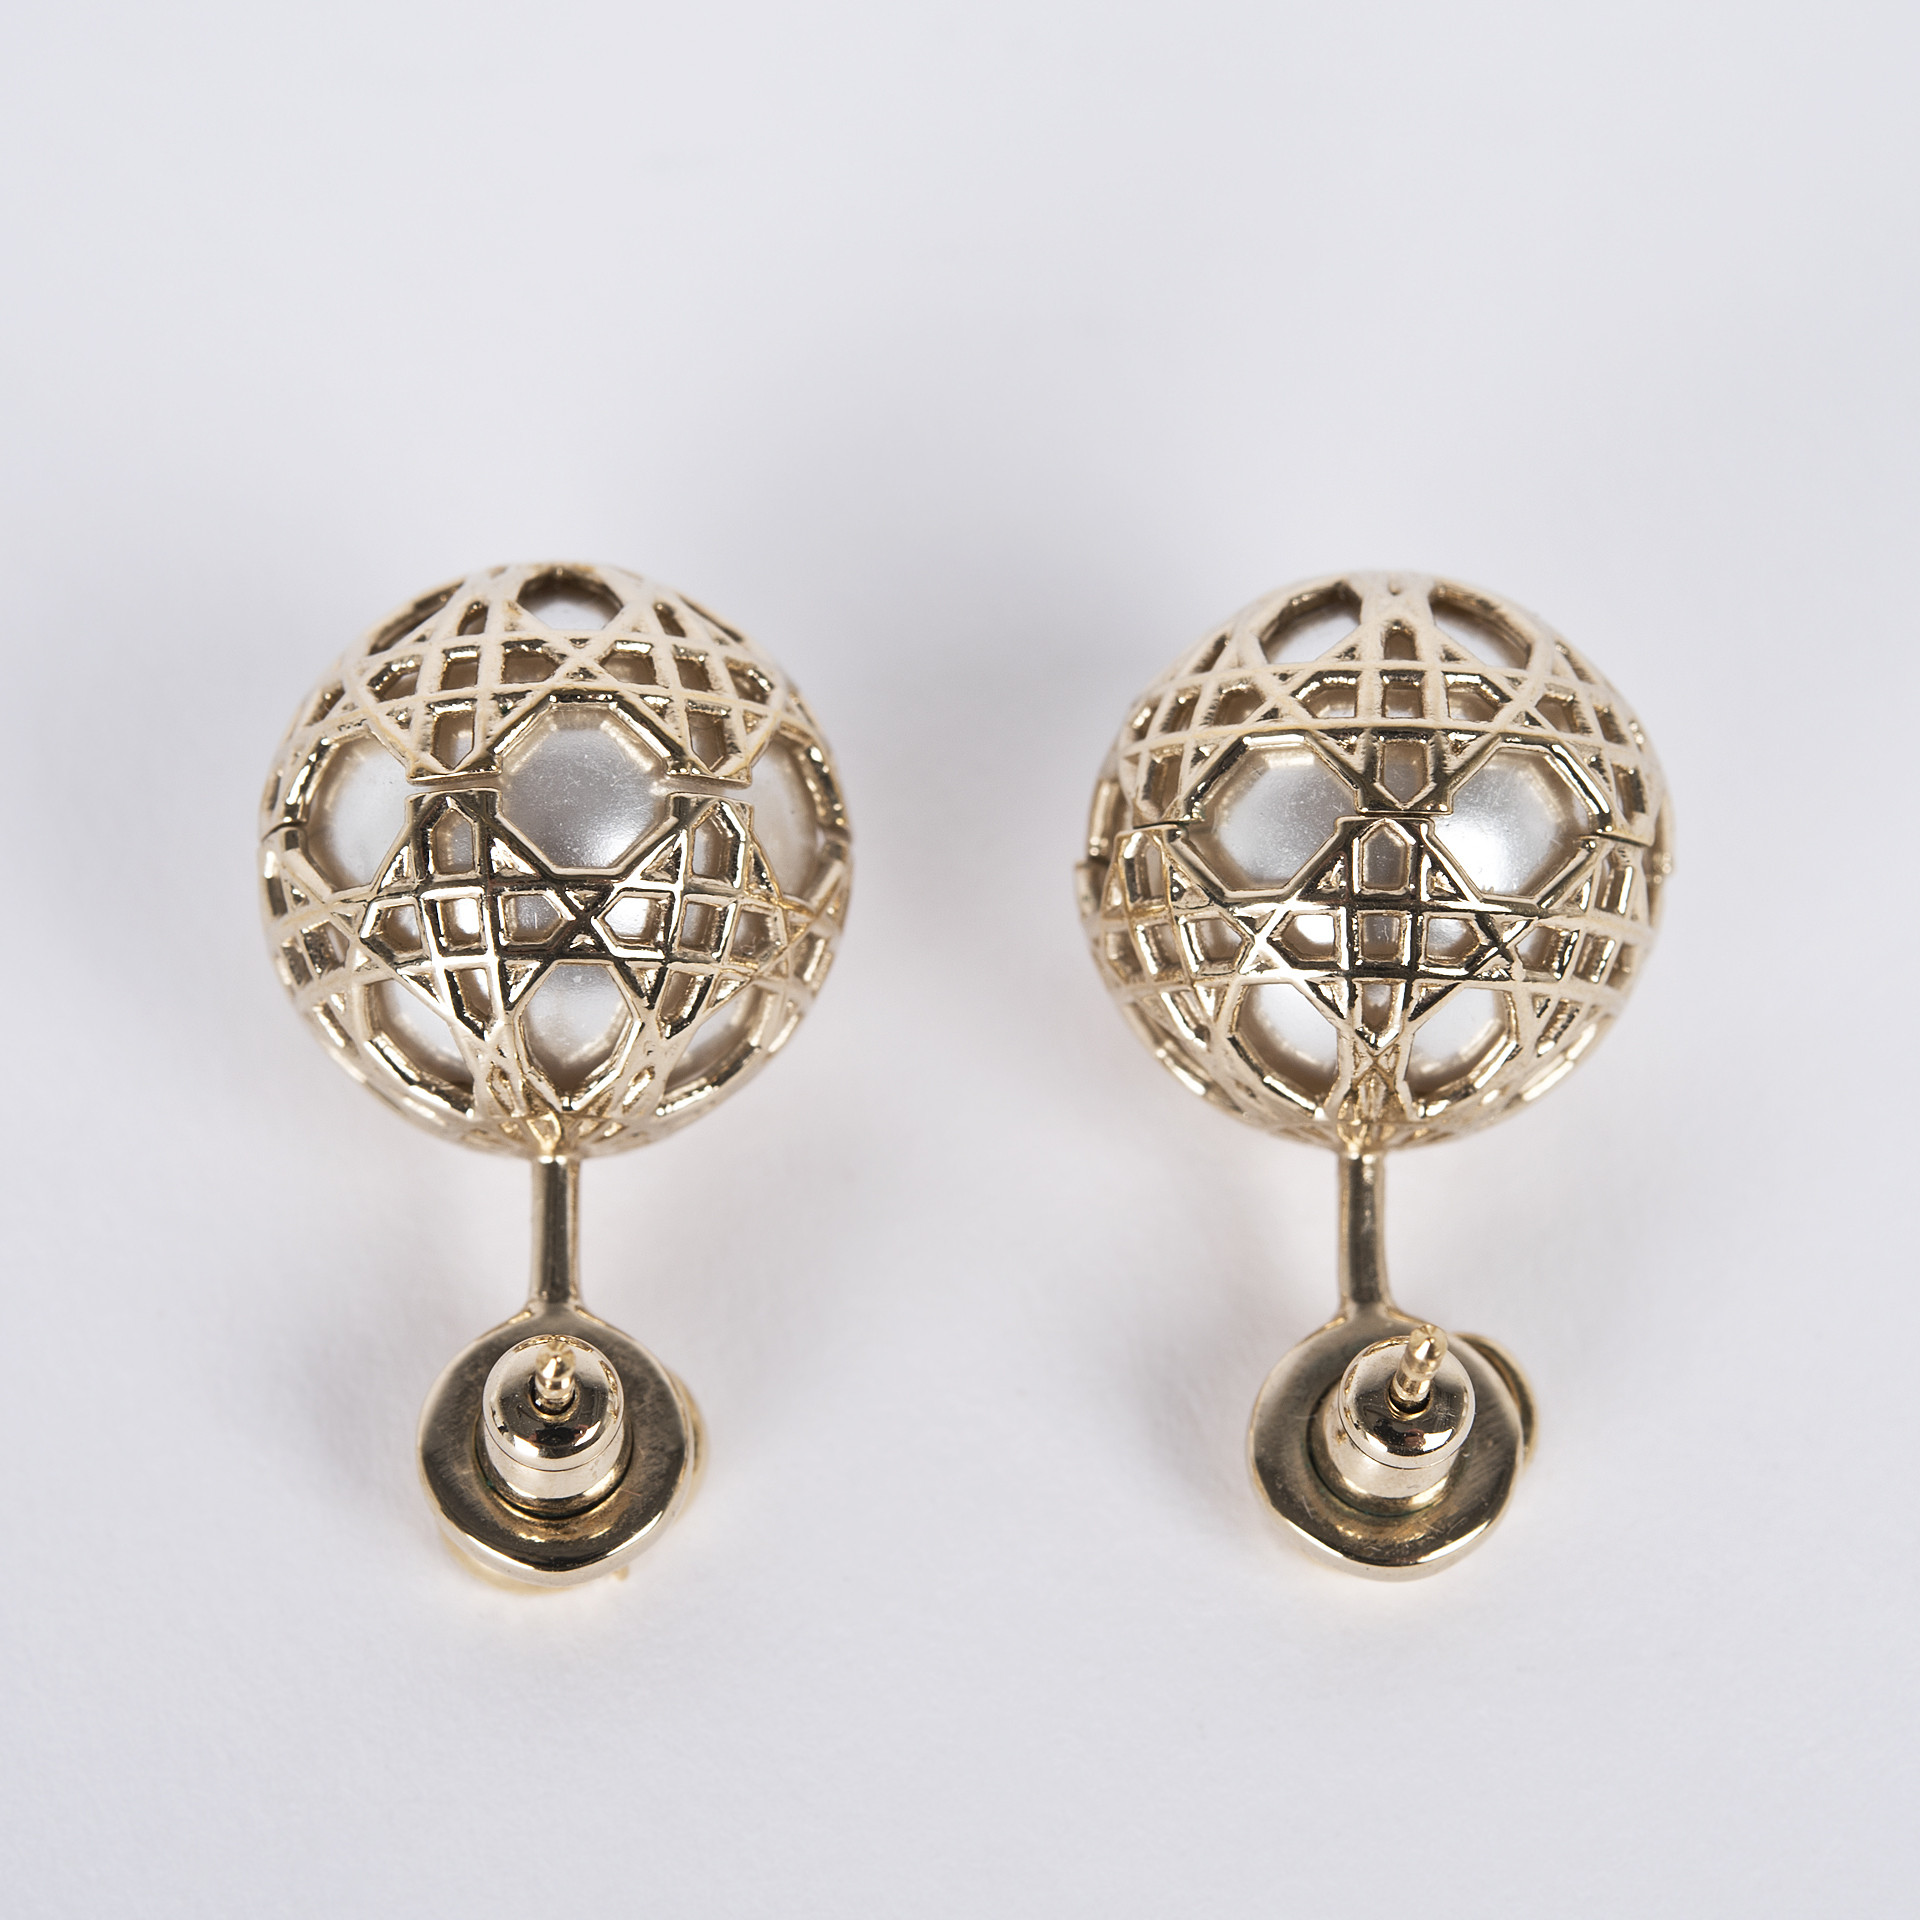 Christian Dior Tribal Earrings
 CHRISTIAN DIOR Pearl Cannage Mise En Dior Tribal Earrings Gold